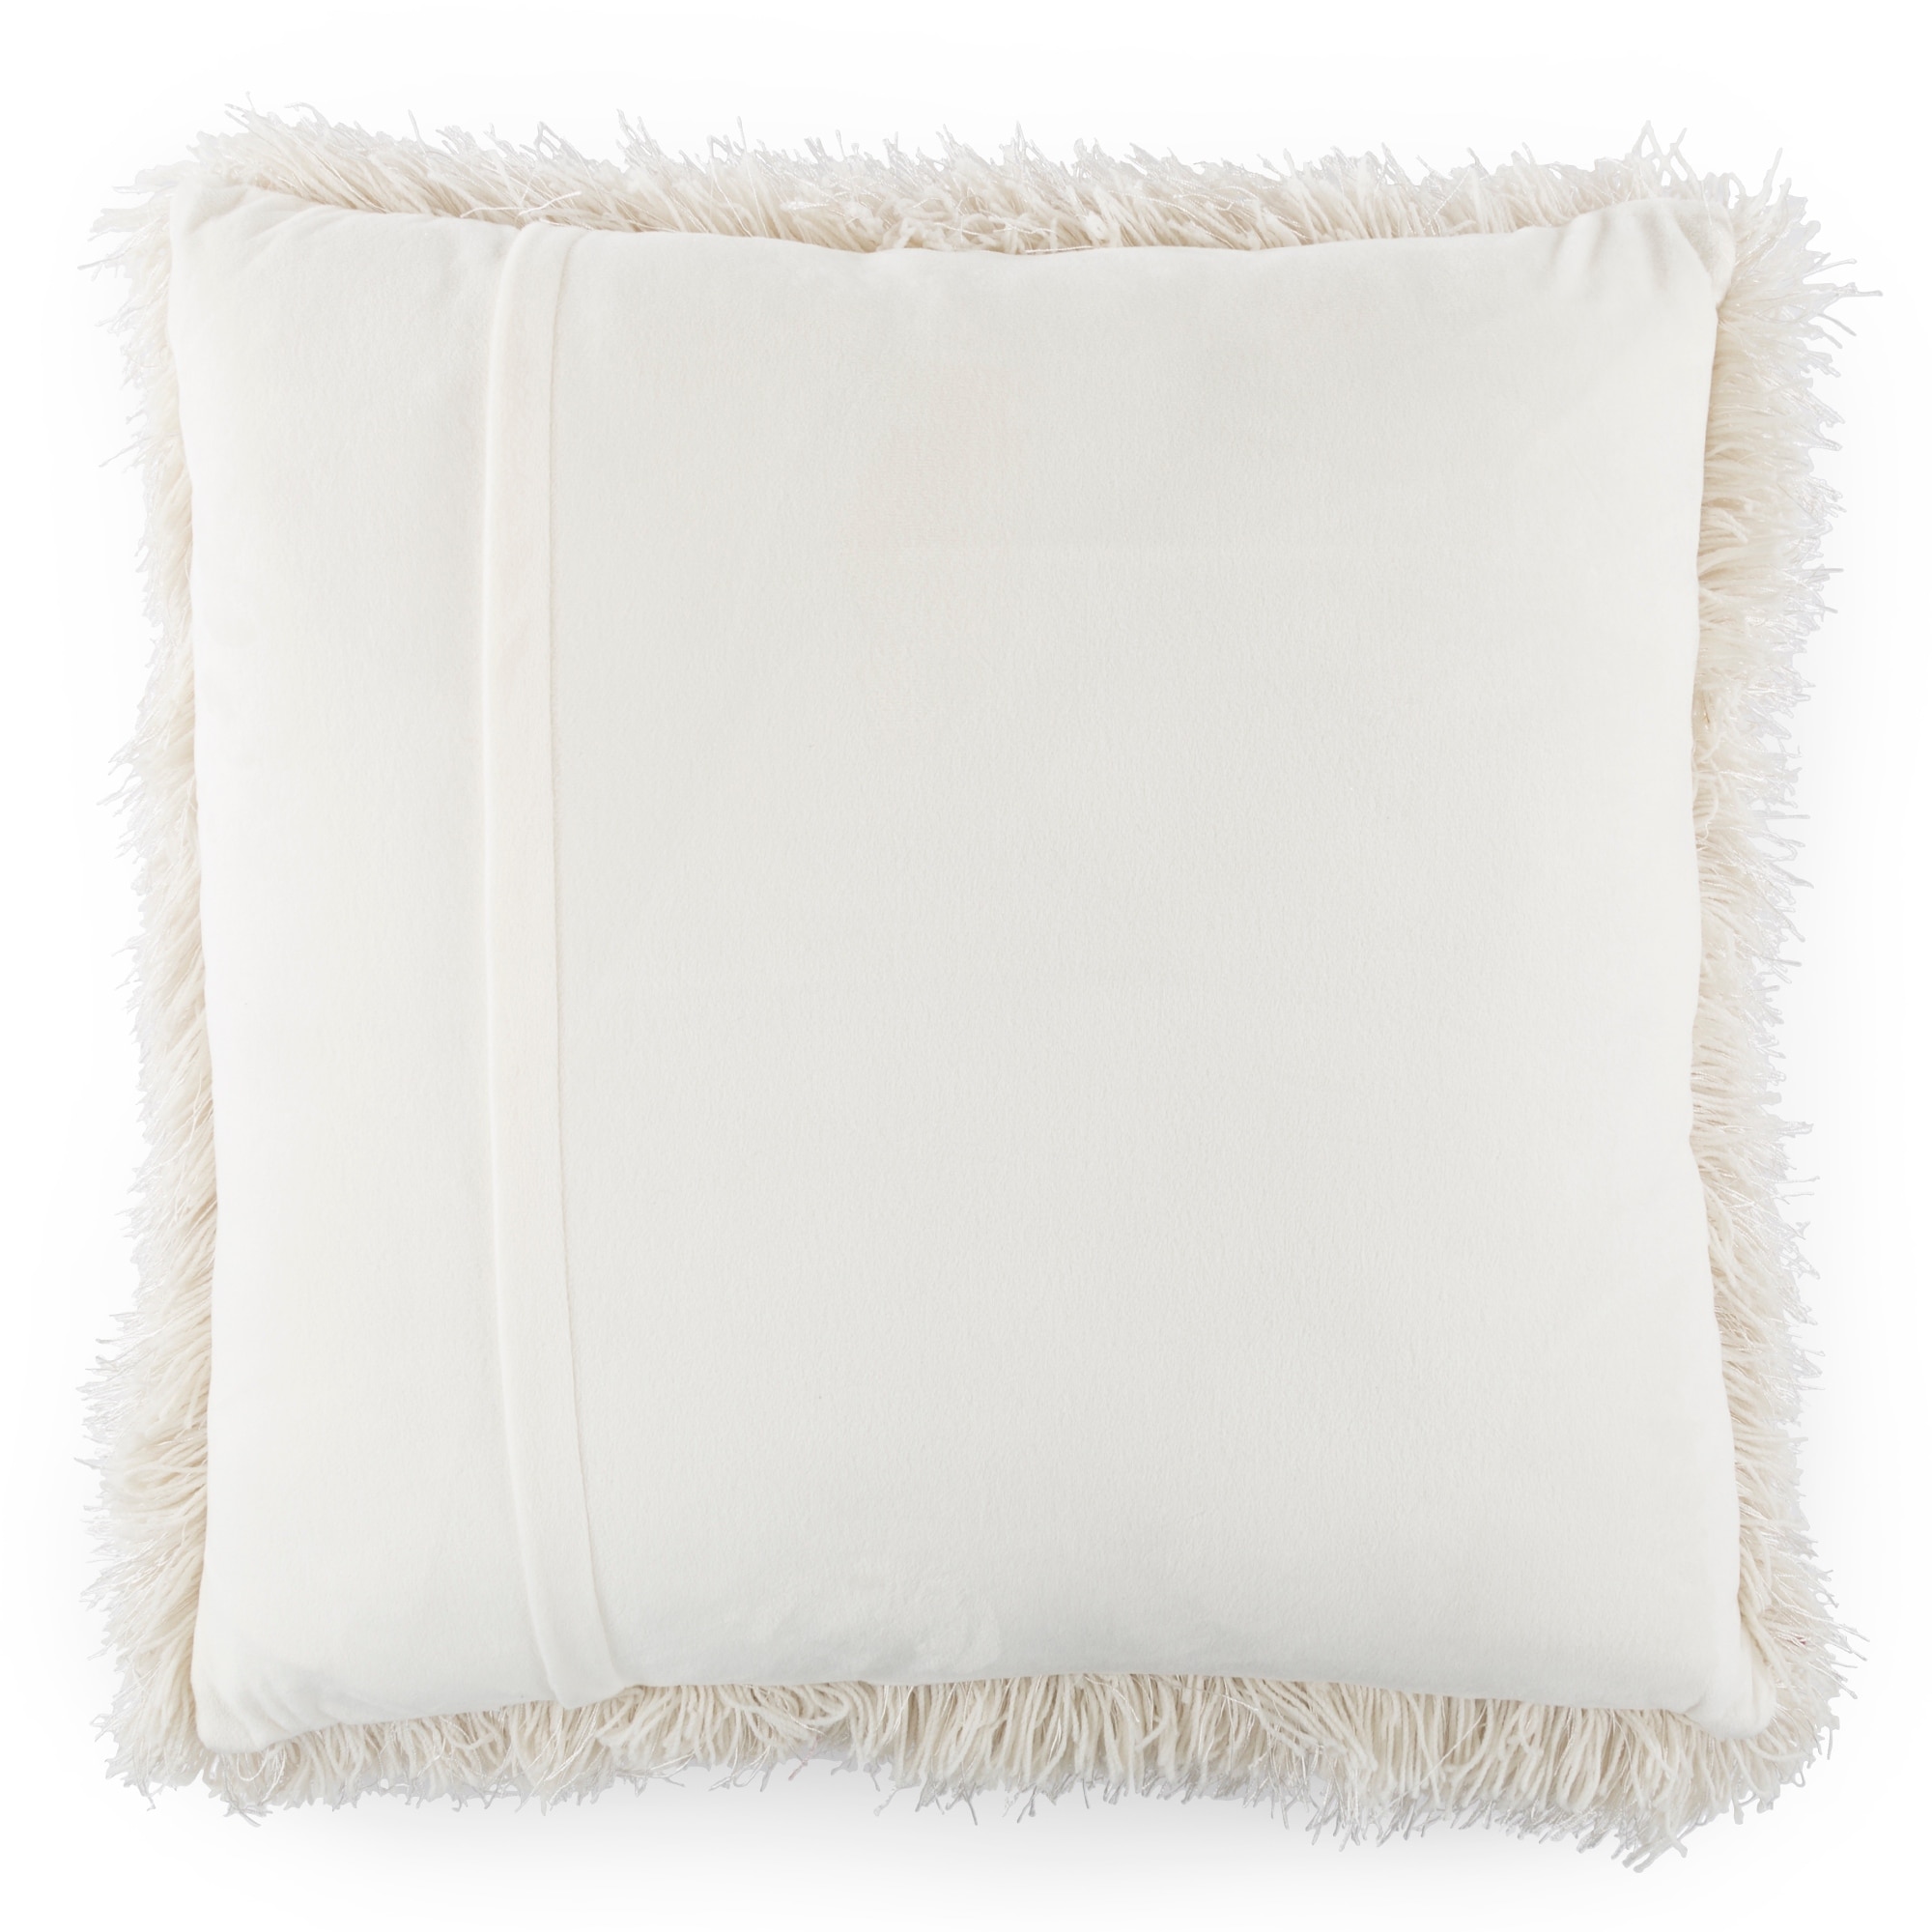 Shaggy Fluffy Floor Cushion Large Sizes Pillow for Floor Sitting